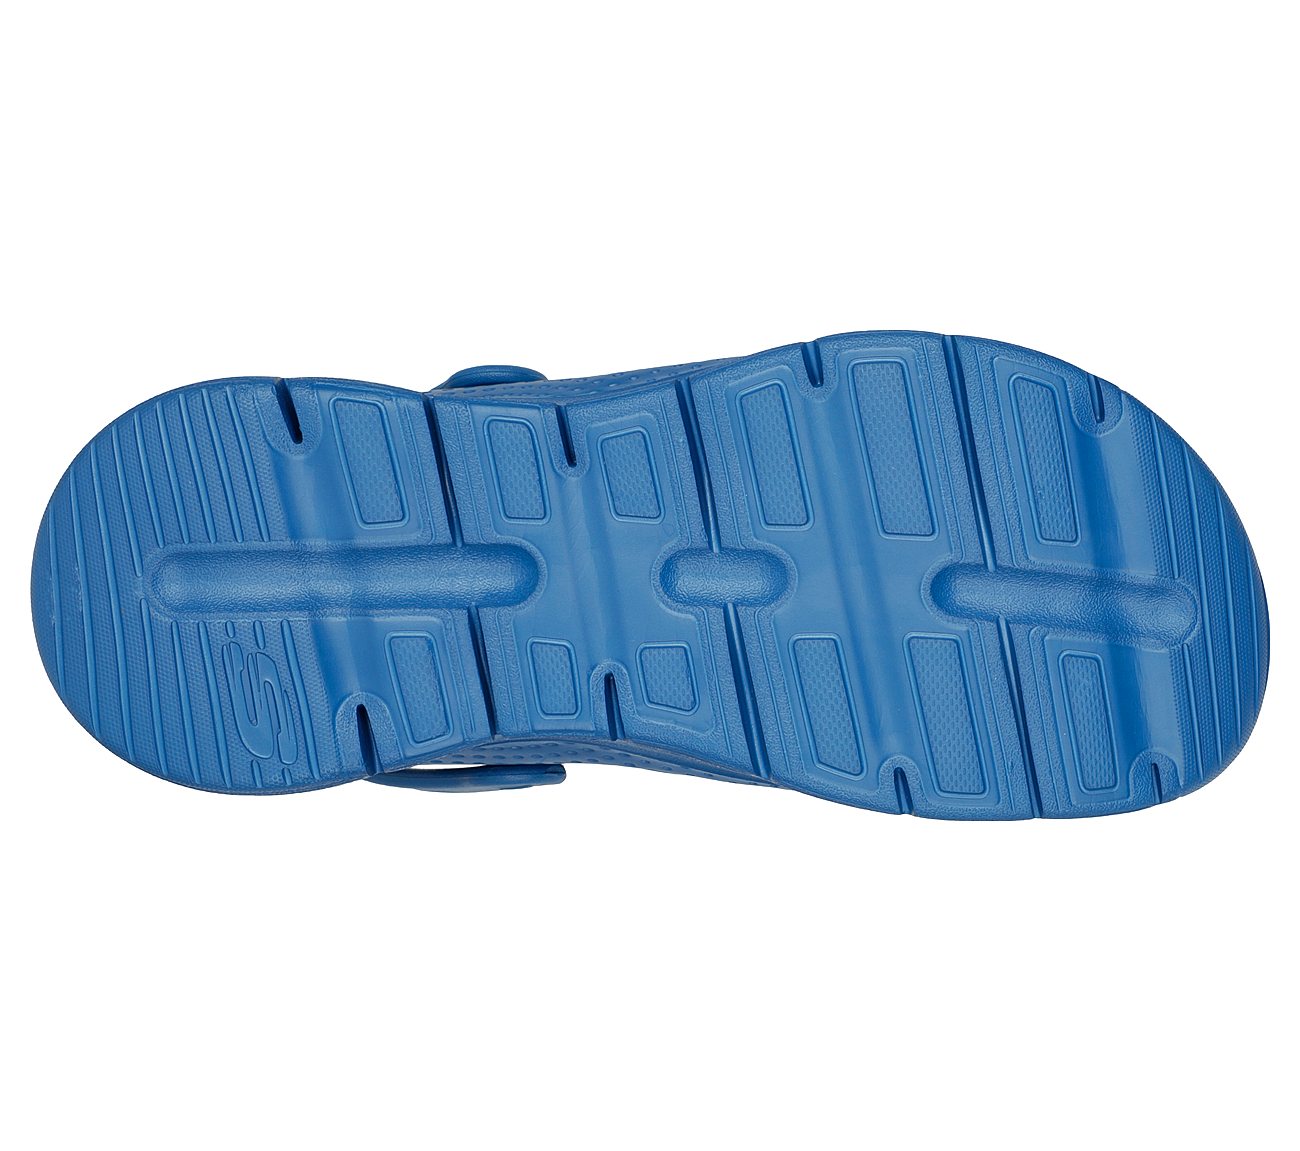 ARCH FIT - VALIANT, BLUE Footwear Bottom View